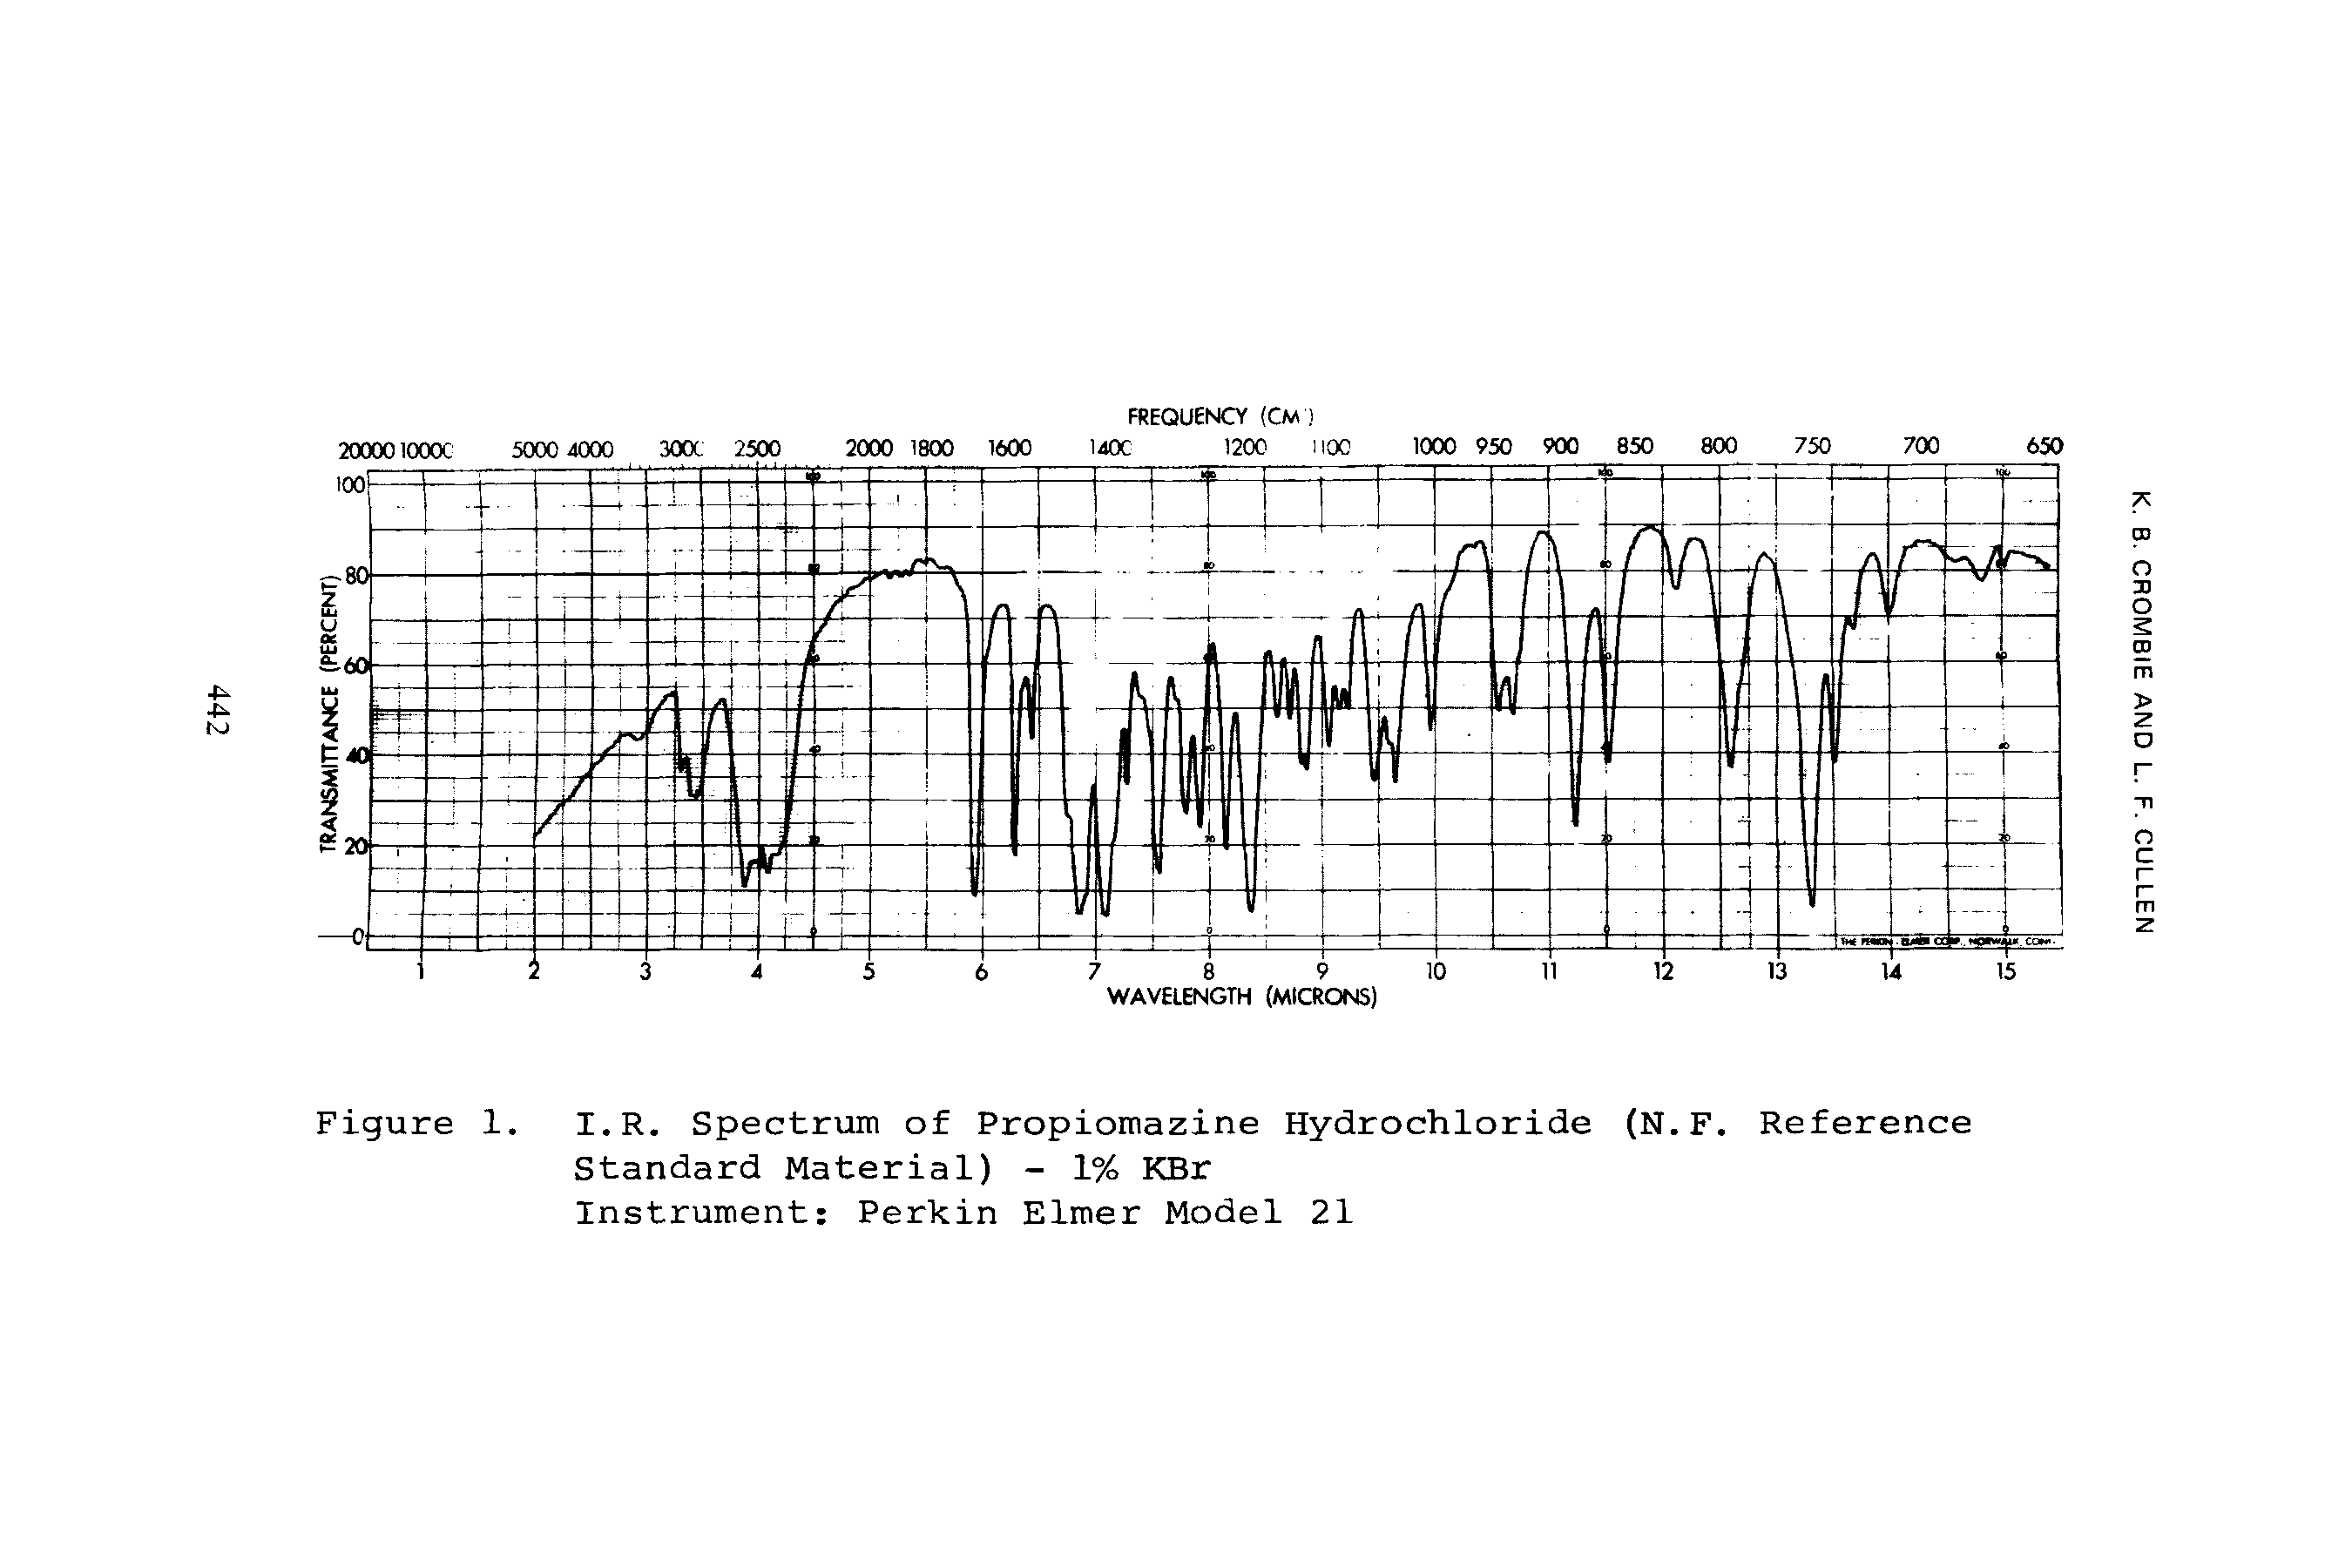 Figure 1. I.R. Spectrum of Propiomazine Hydrochloride (N.F. Reference Standard Material) - 1% KBr Instrument Perkin Elmer Model 21...